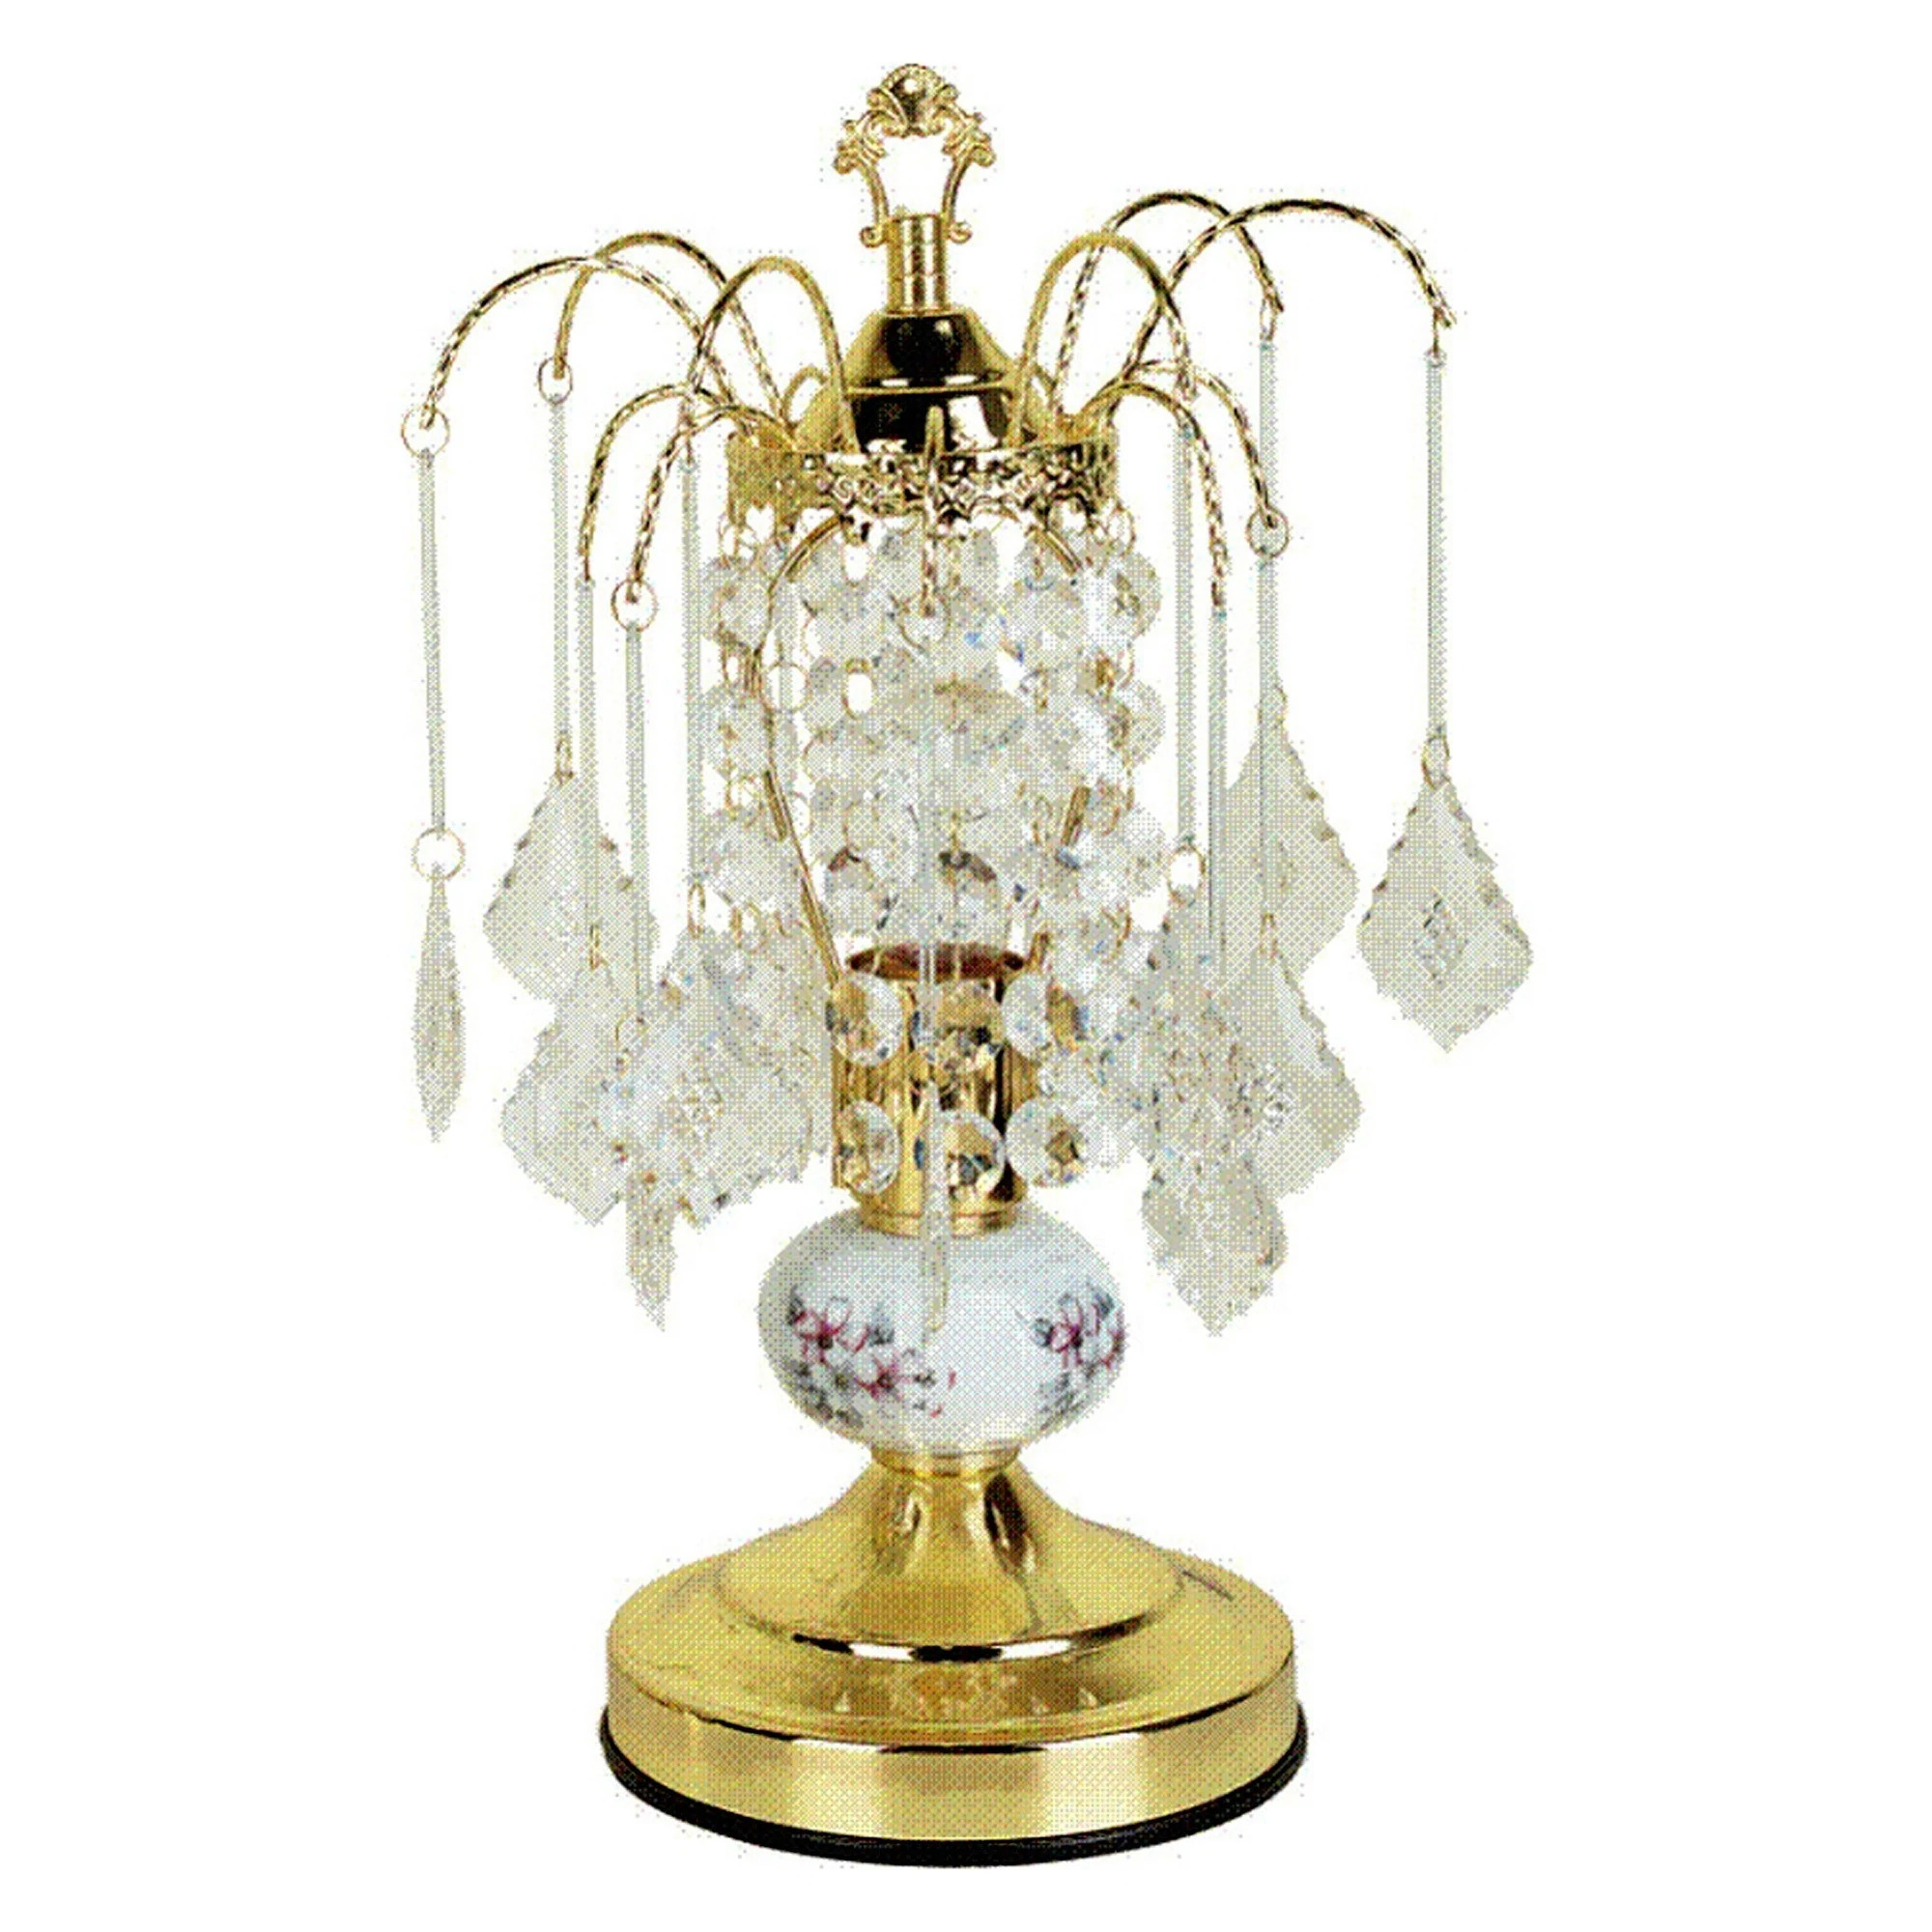 HomeRoots Vintage Gold Floral Chandelier Table Lamp - image 2 of 3